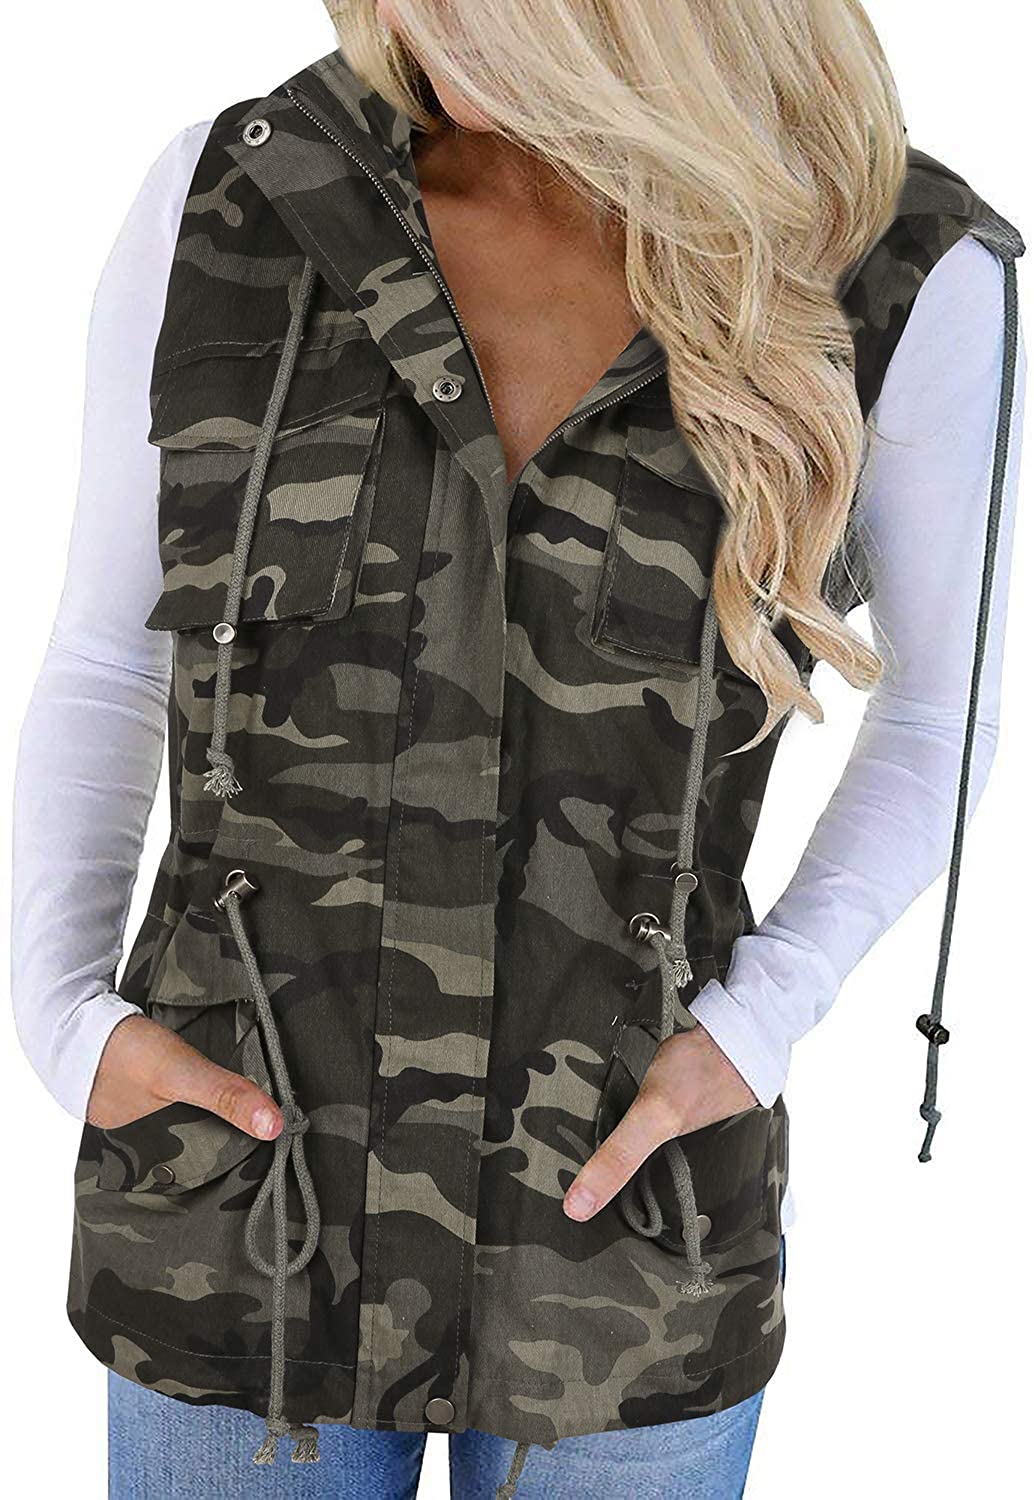 Hot sales of goods Tutorutor Womens Military Safari Camo Vest Utility ...